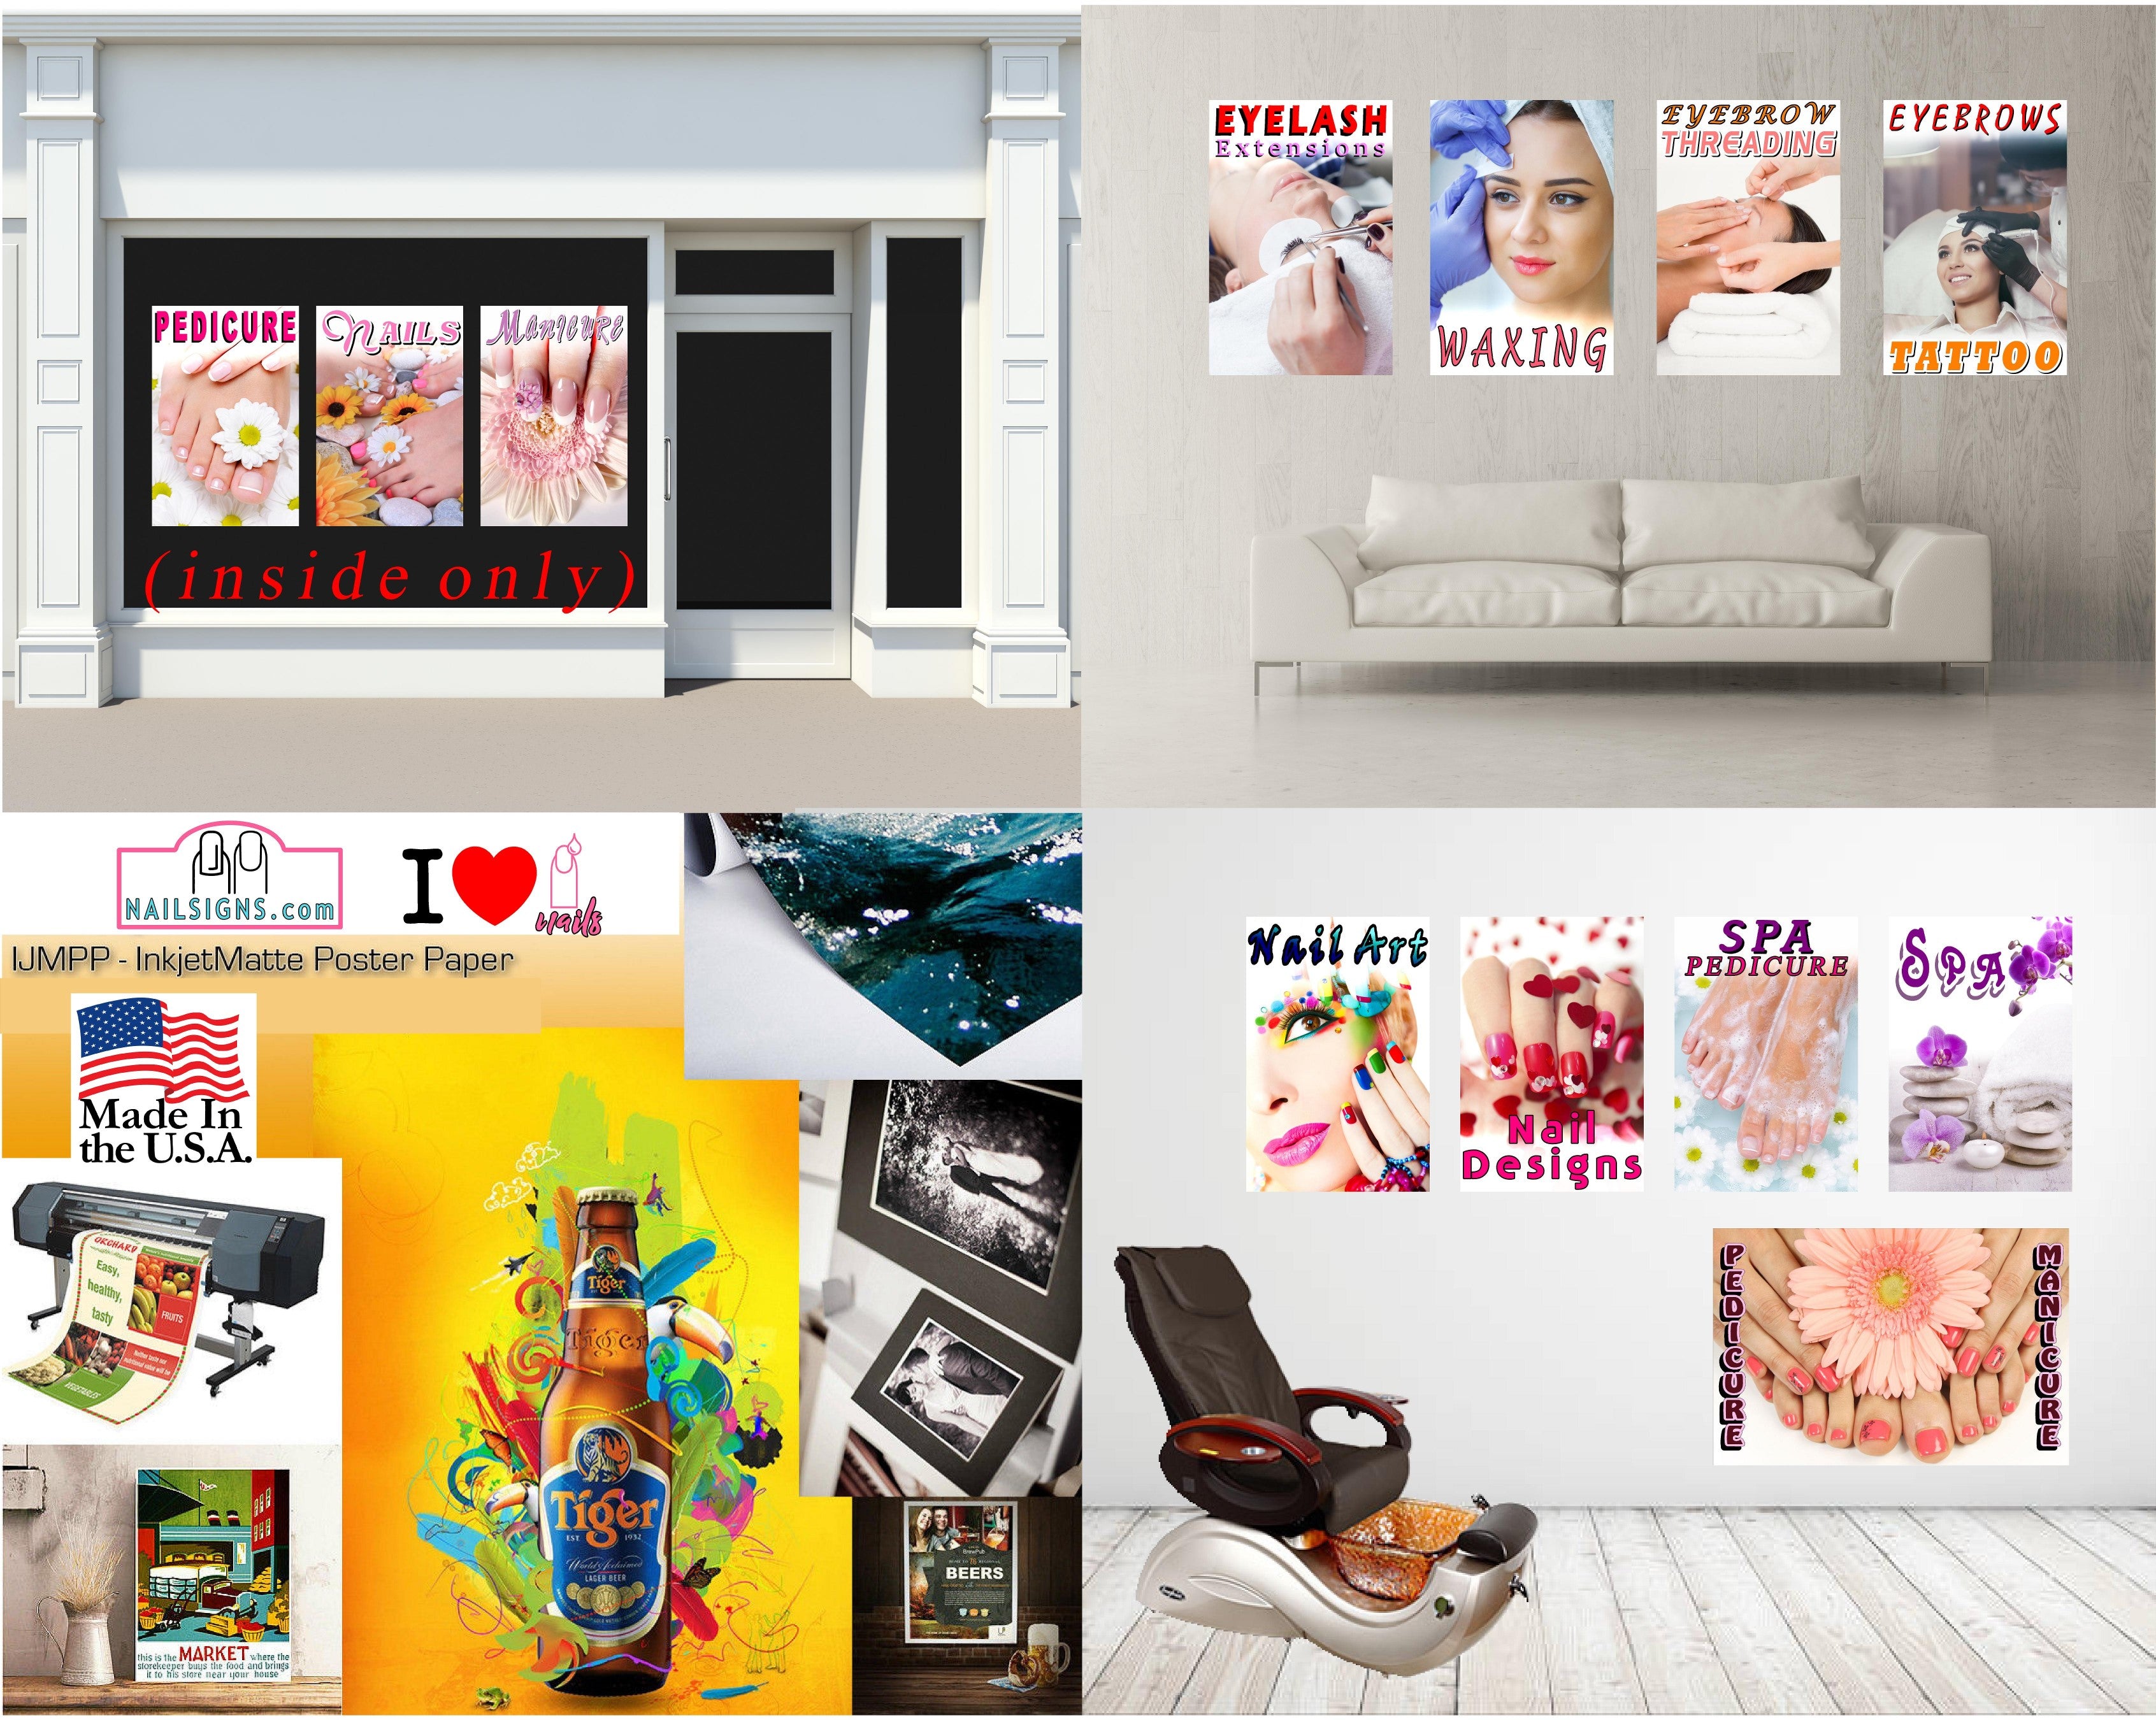 Pedicure 04 Photo-Realistic Paper Poster Premium Matte Interior Inside Sign Advertising Marketing Wall Window Non-Laminated Horizontal